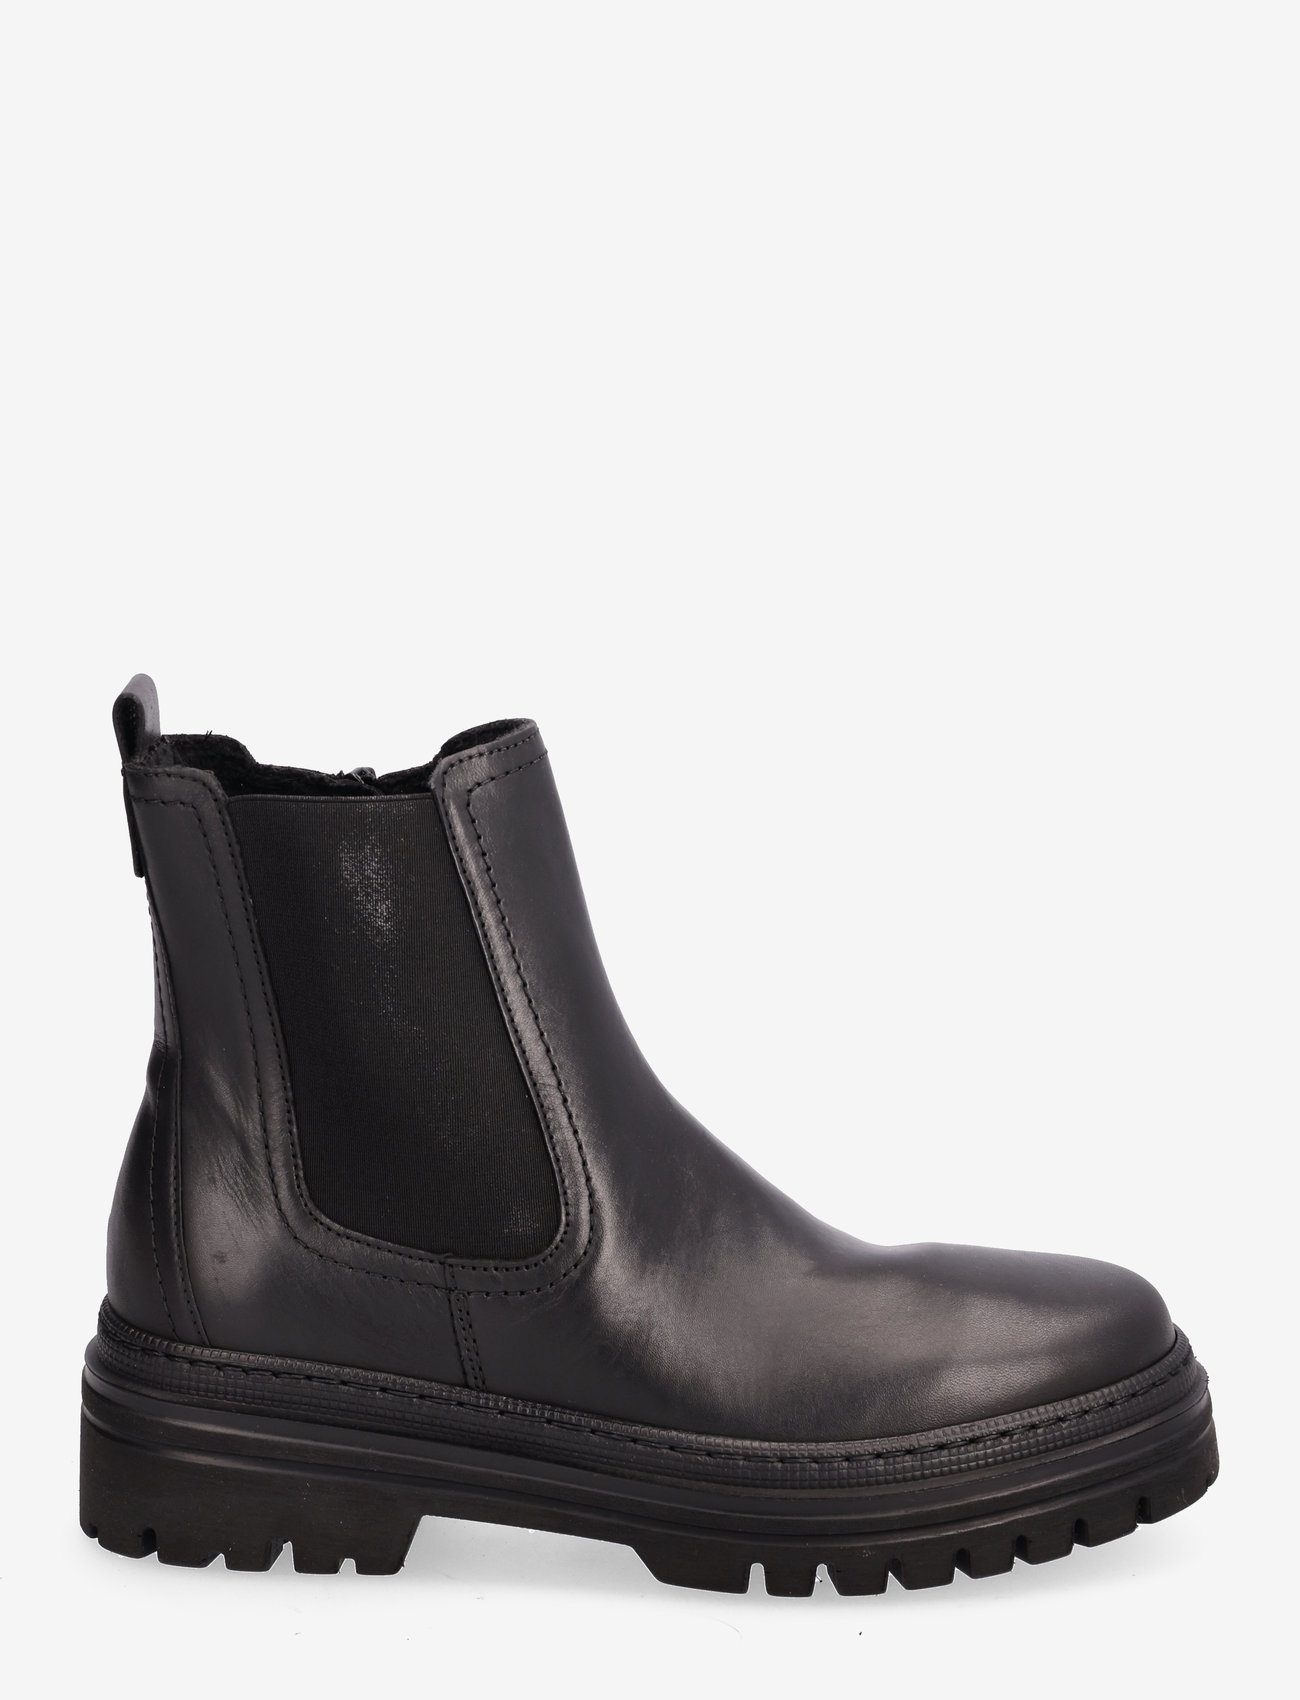 Gabor - Chelsea - chelsea boots - black - 1